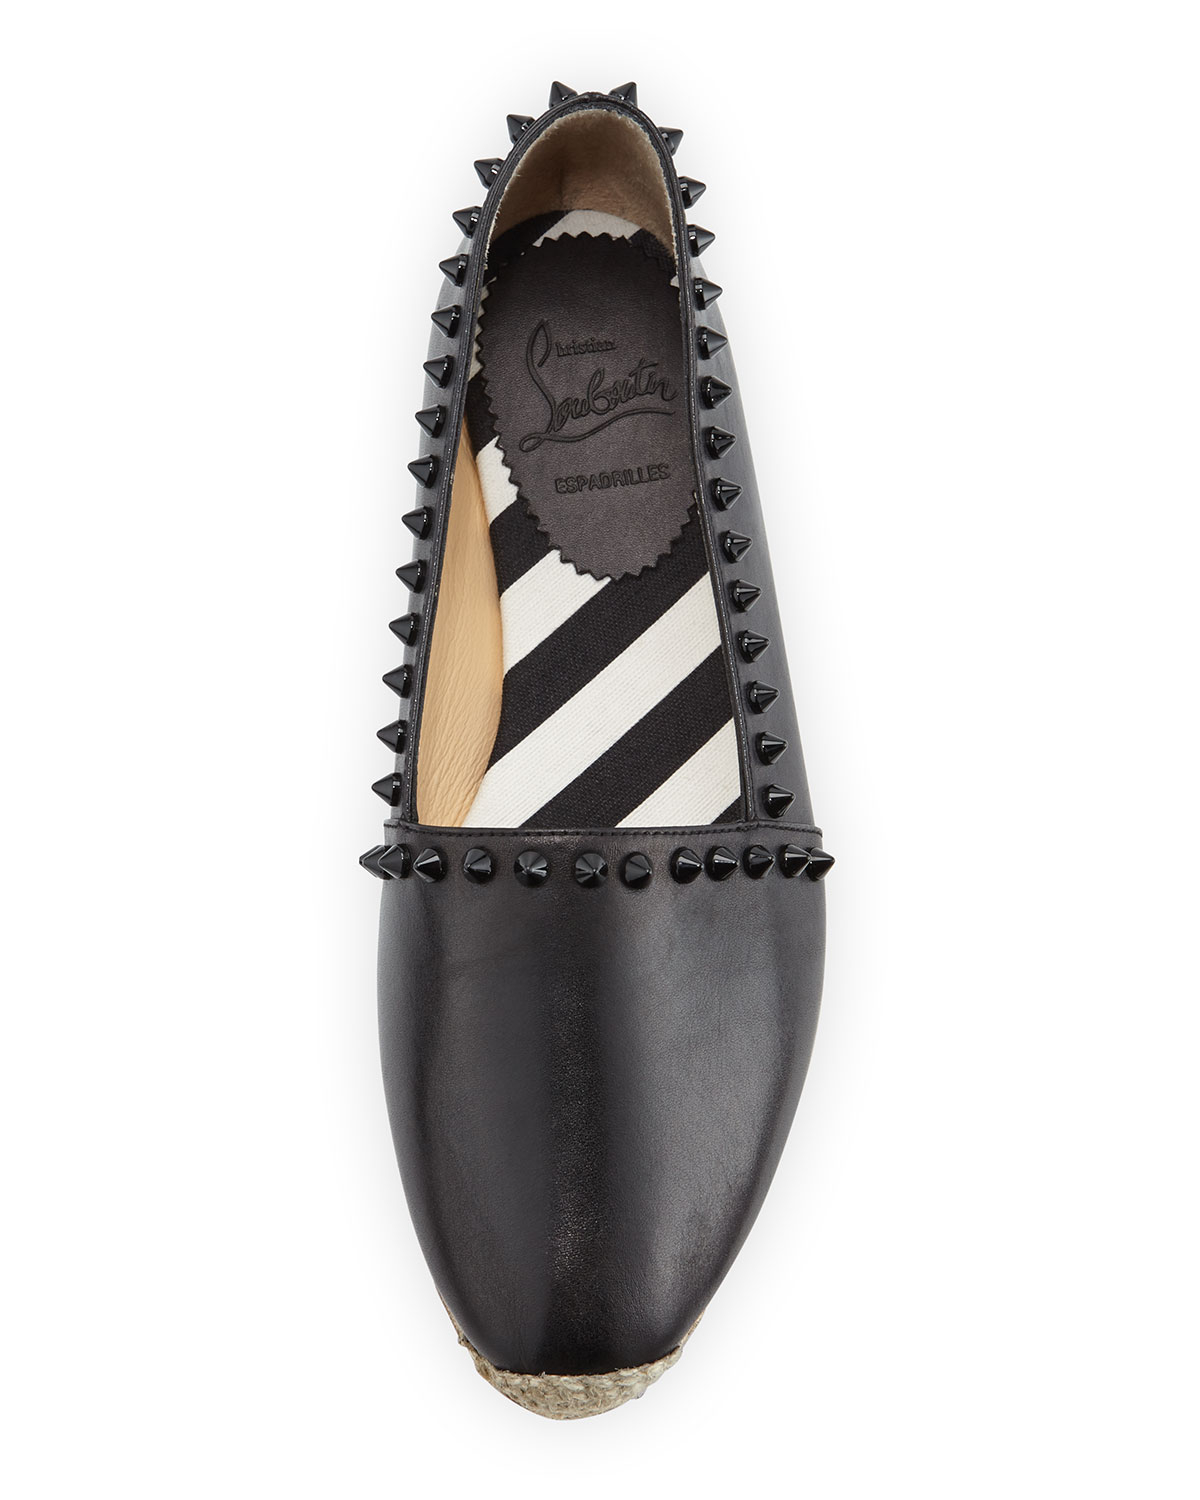 replica shoes for men - christian louboutin espadrille flats Black leather bow details ...